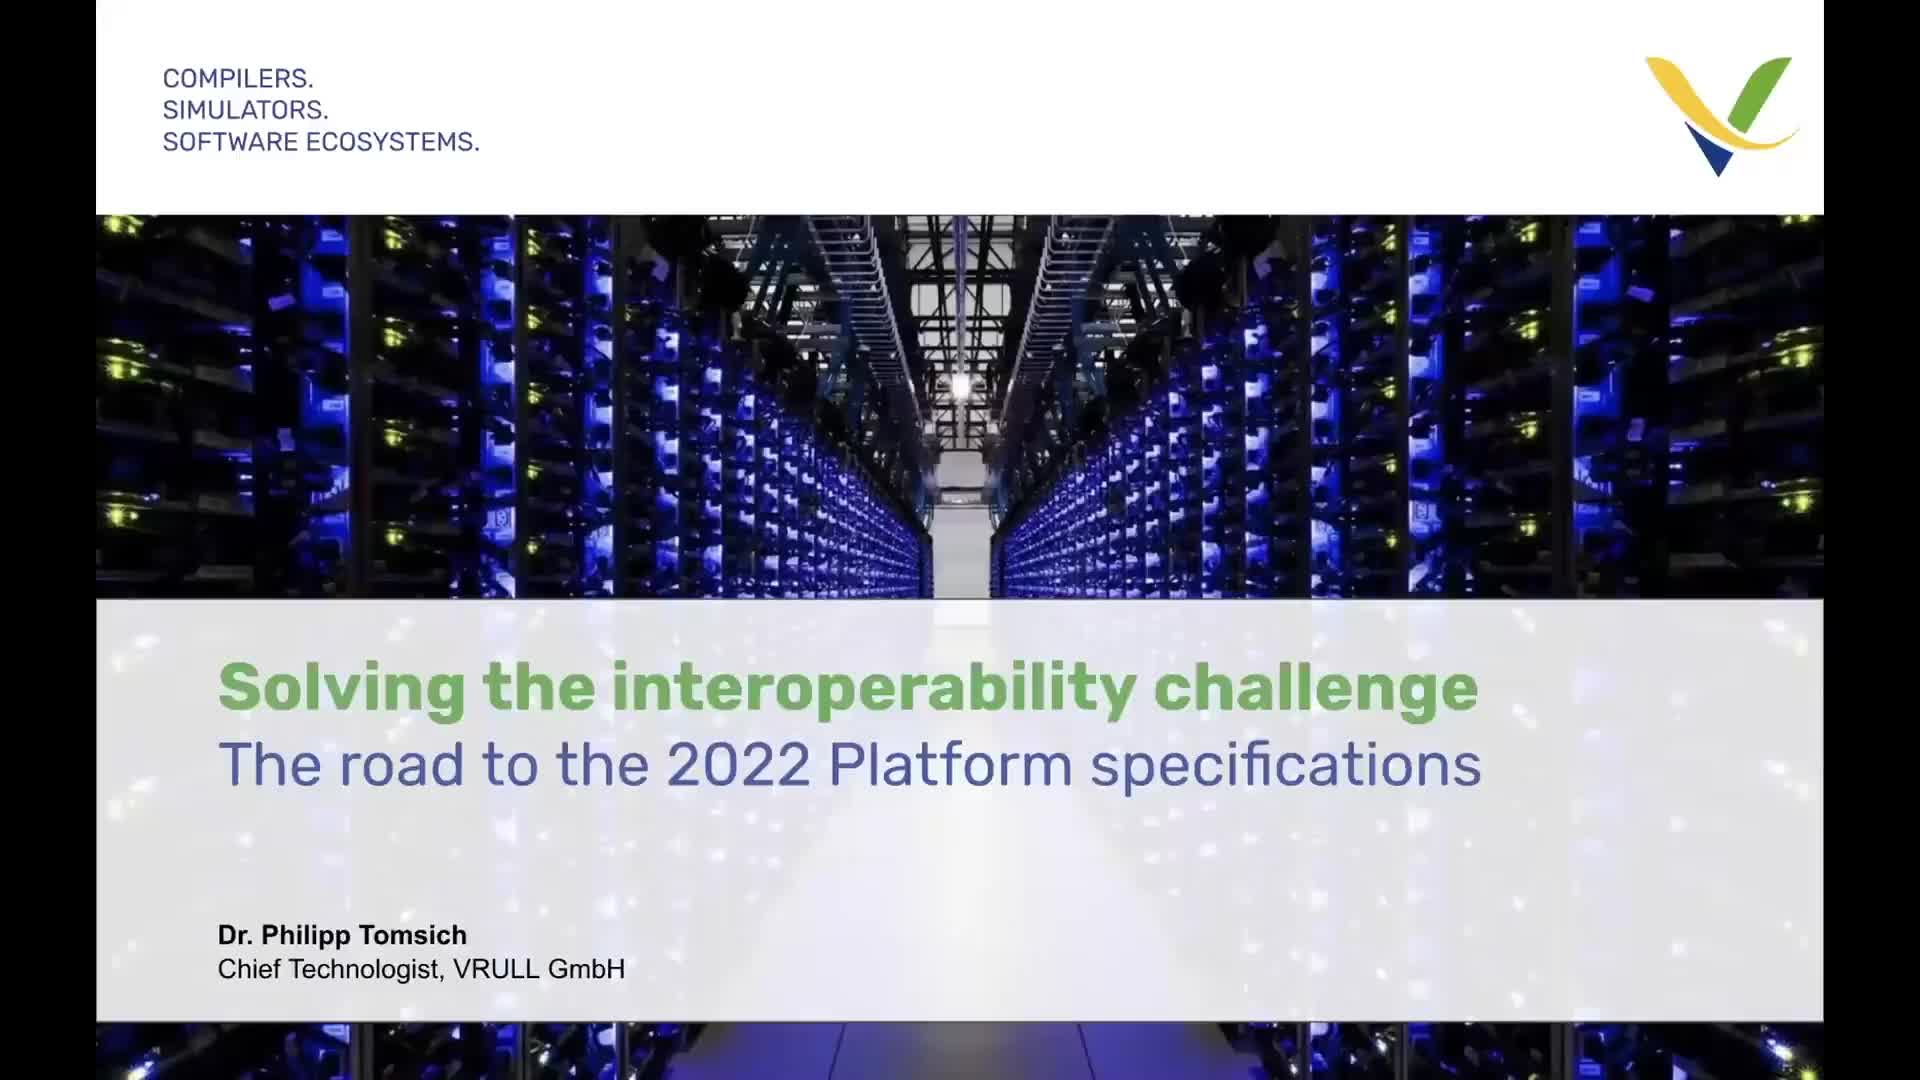 Philipp Tomsich Solving the interoperability challenge1